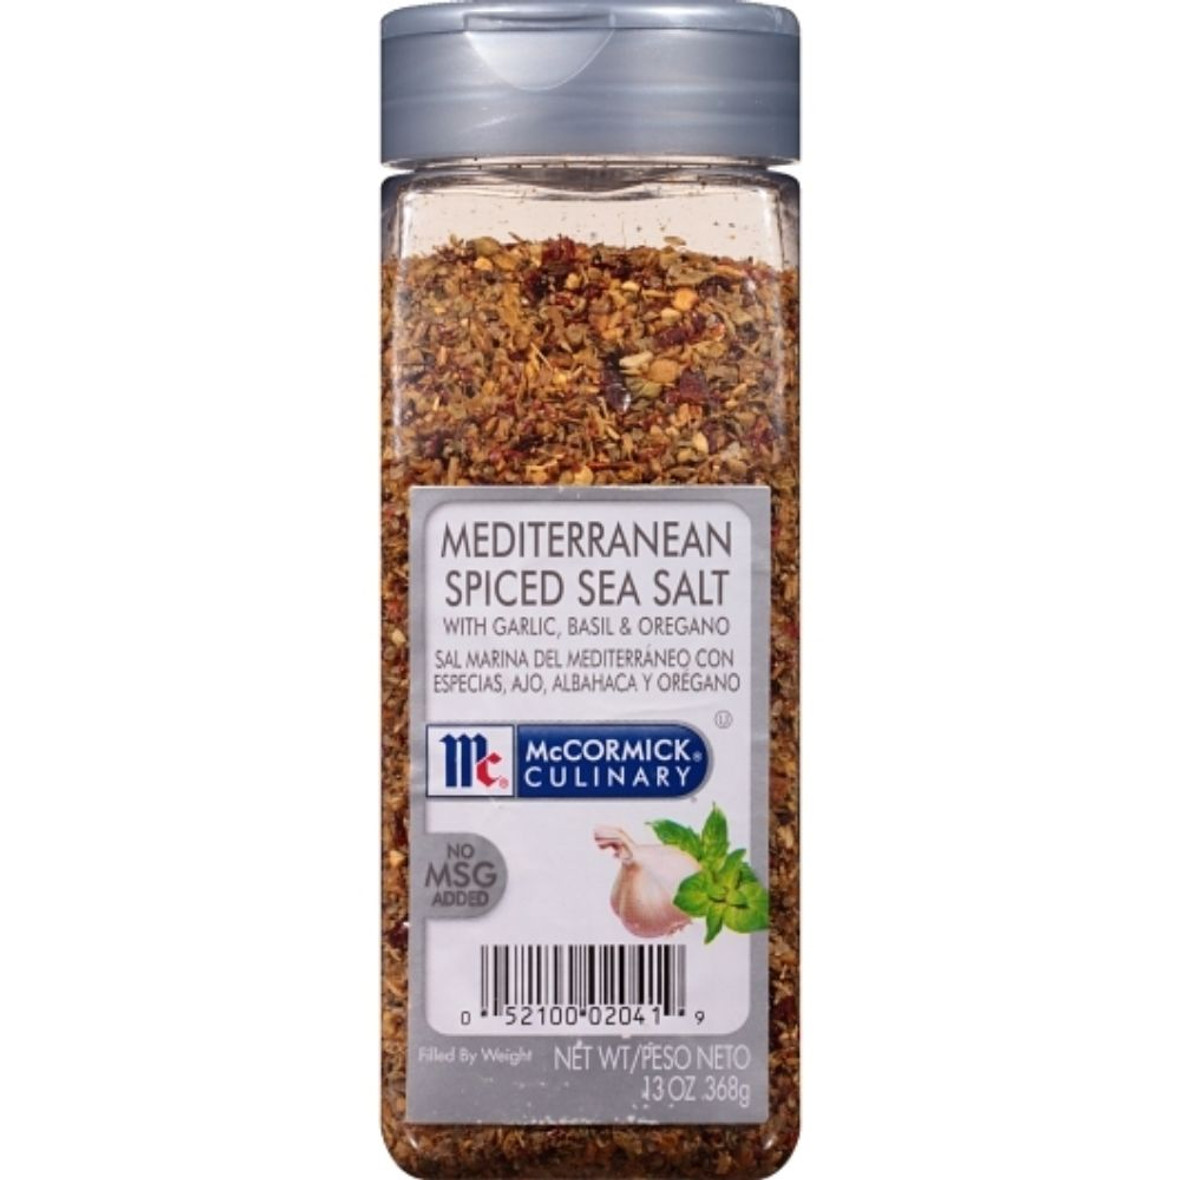 Mccormick Sea Salt Mediterranean Spiced